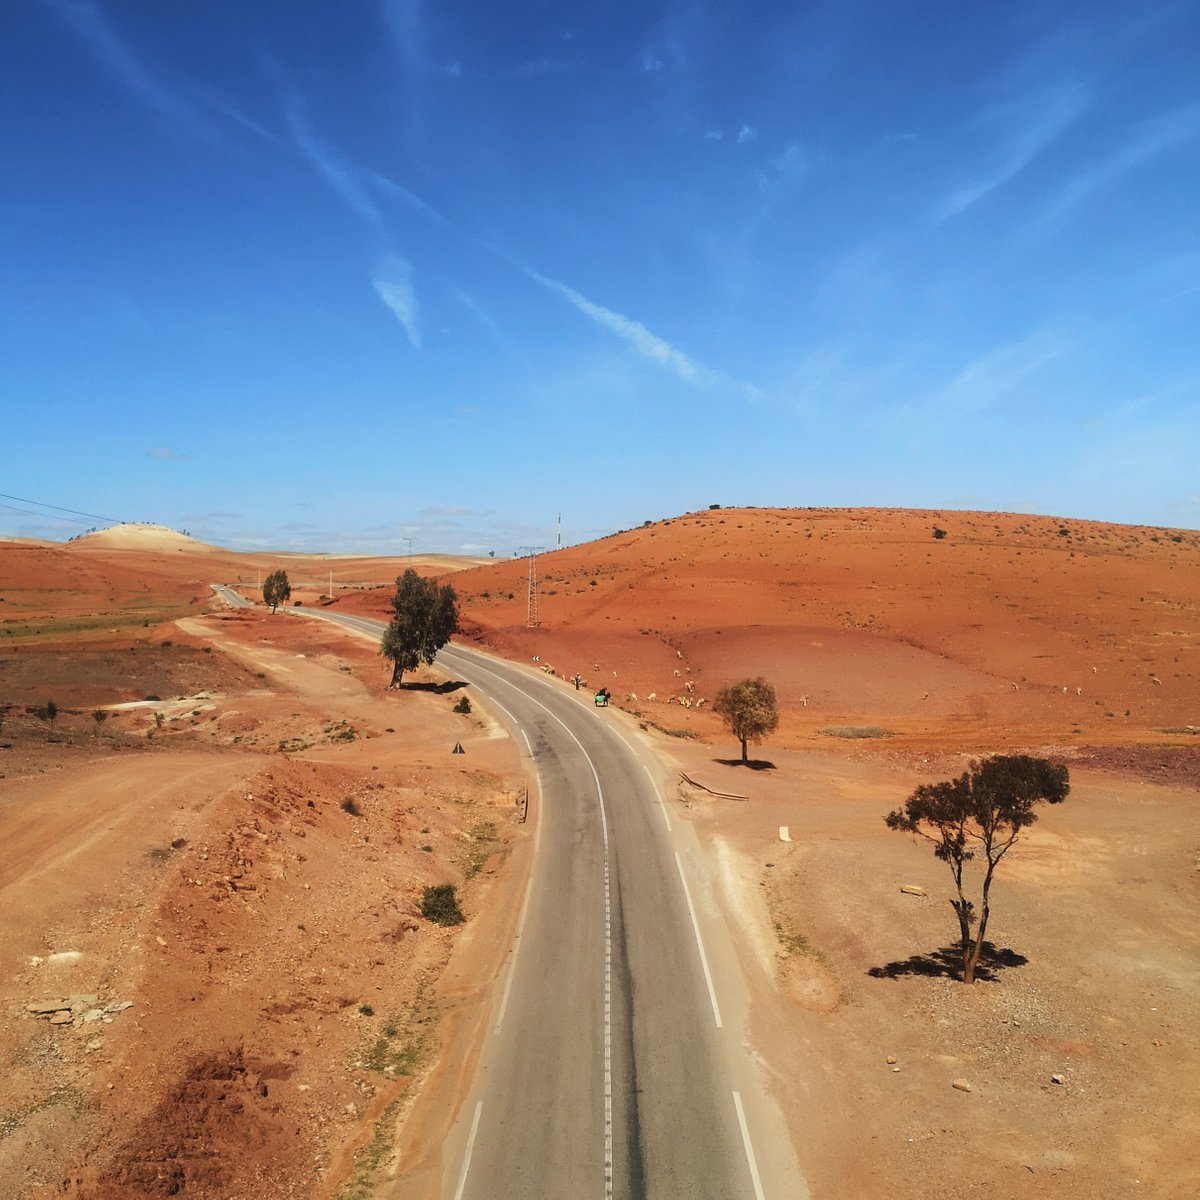 Alone - Colour Desert Landscape Morocco Travel Photography Print, 12x12 Inches, C-Type, Un... by Amadeus Long